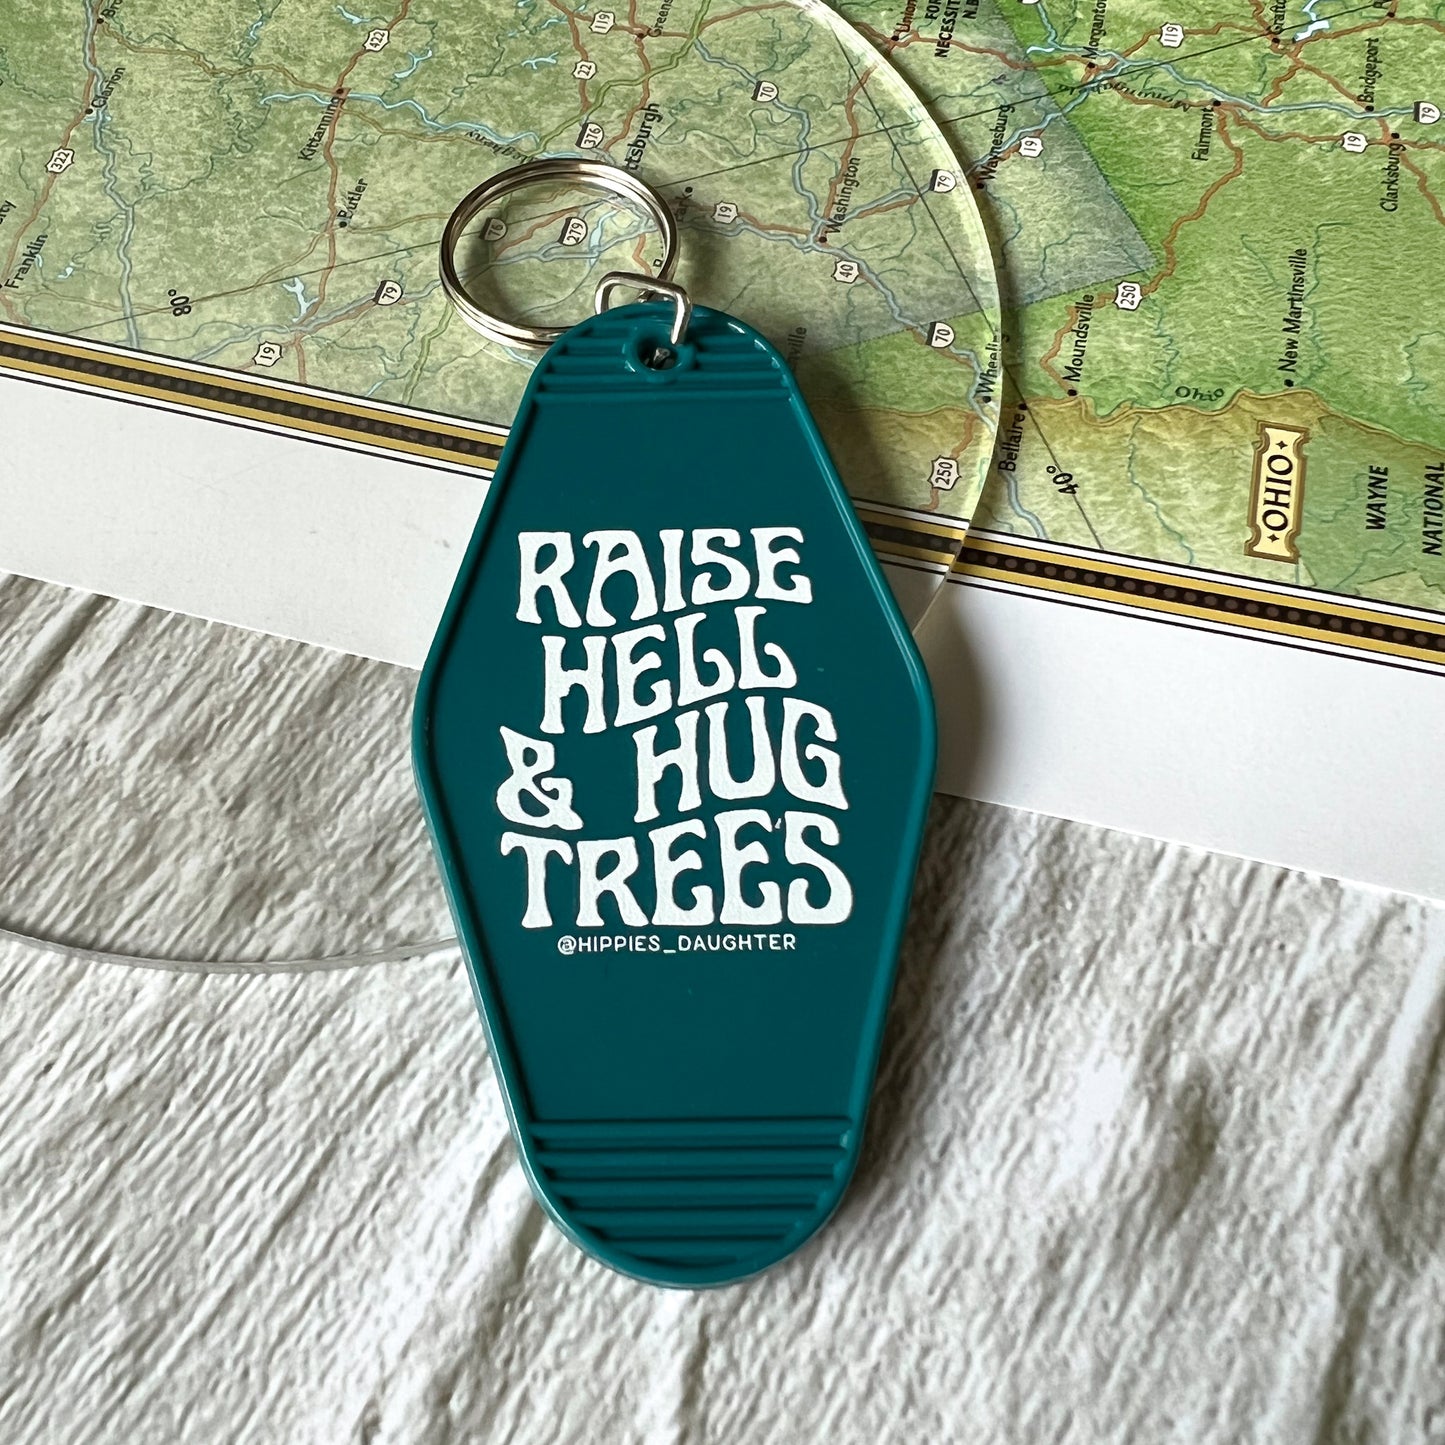 Raise hell and hug trees // motel keychain